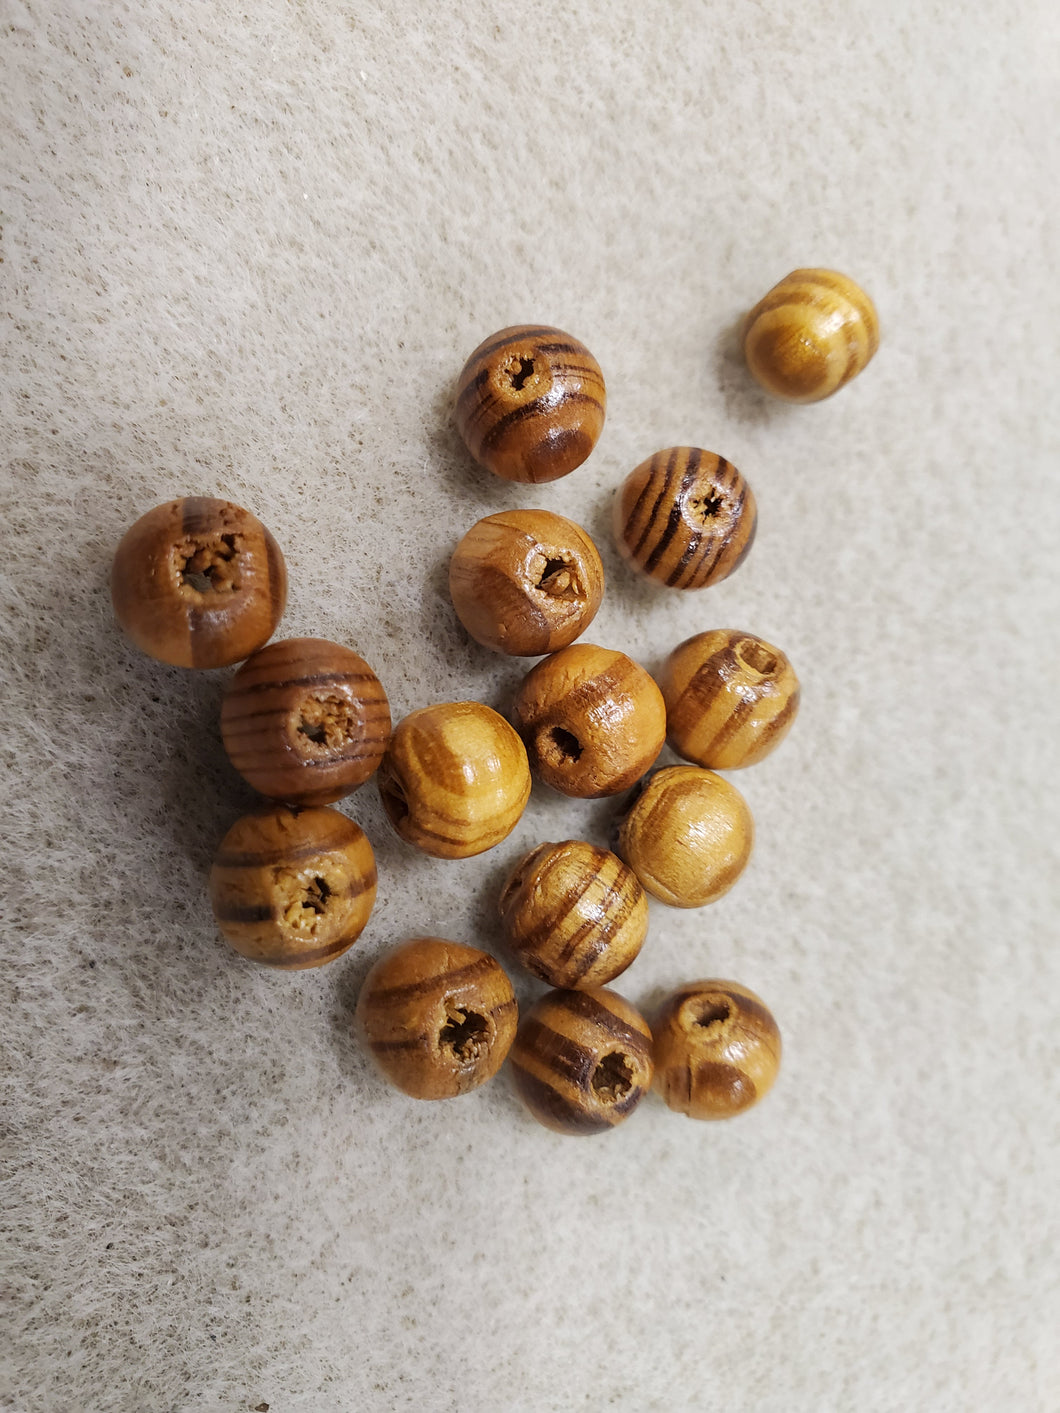 Burly Wood Beads